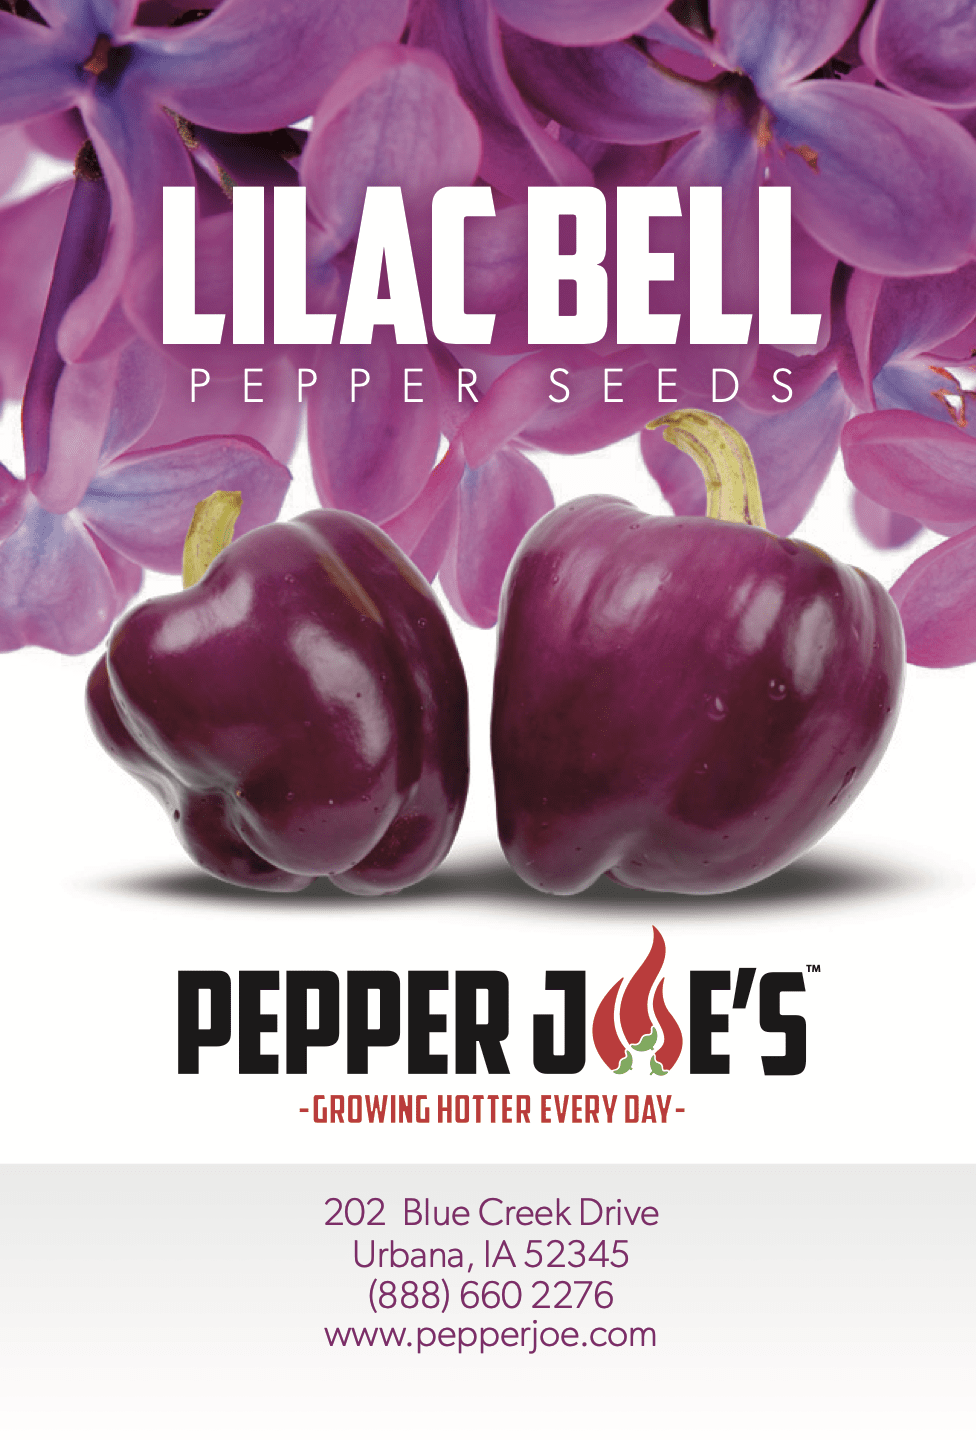 Lilac bell pepper seeds